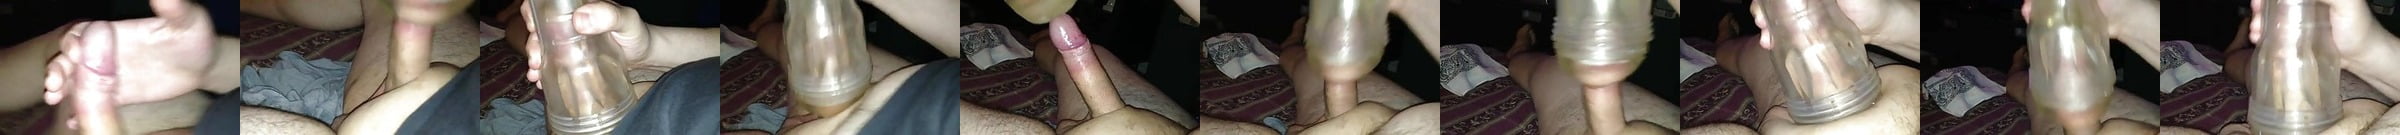 Cumming 6 Times Using A Fleshlight Man Porn 16 XHamster